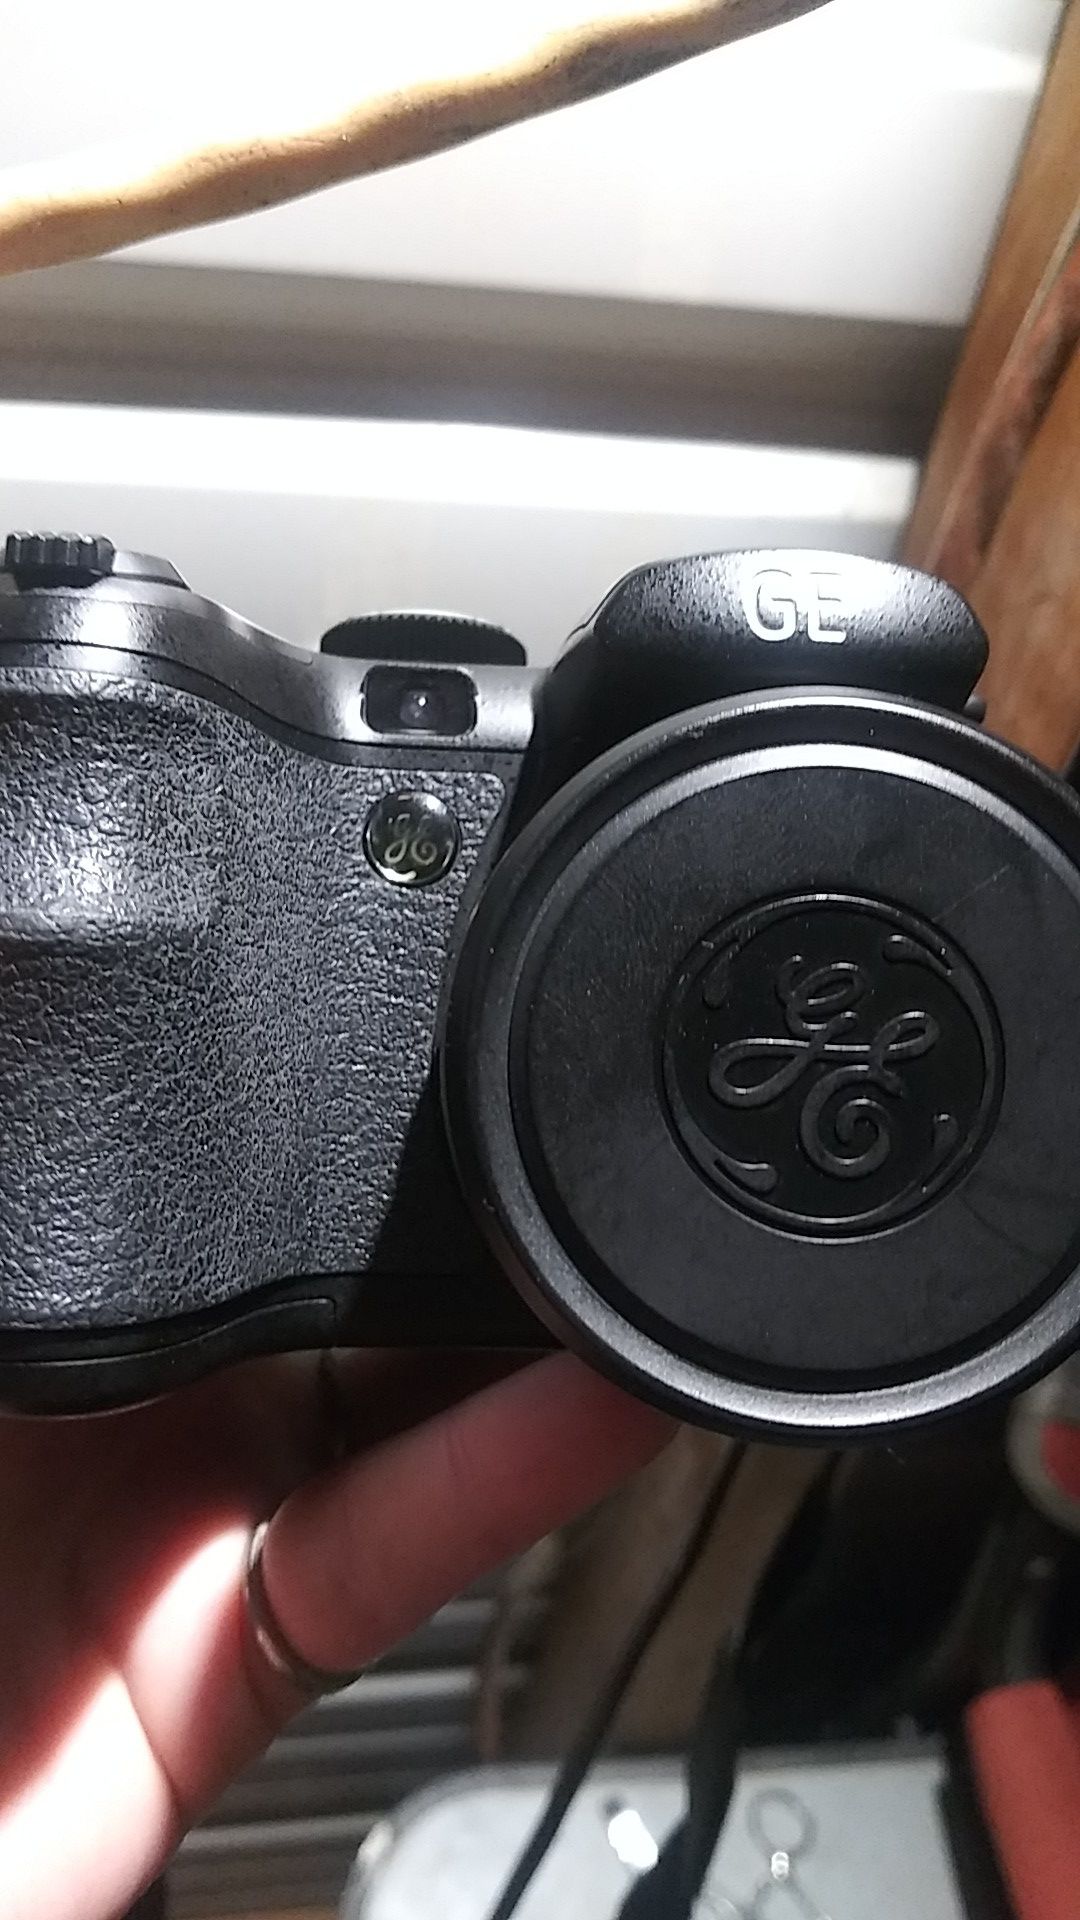 GE X5 14.1 megapixel camera